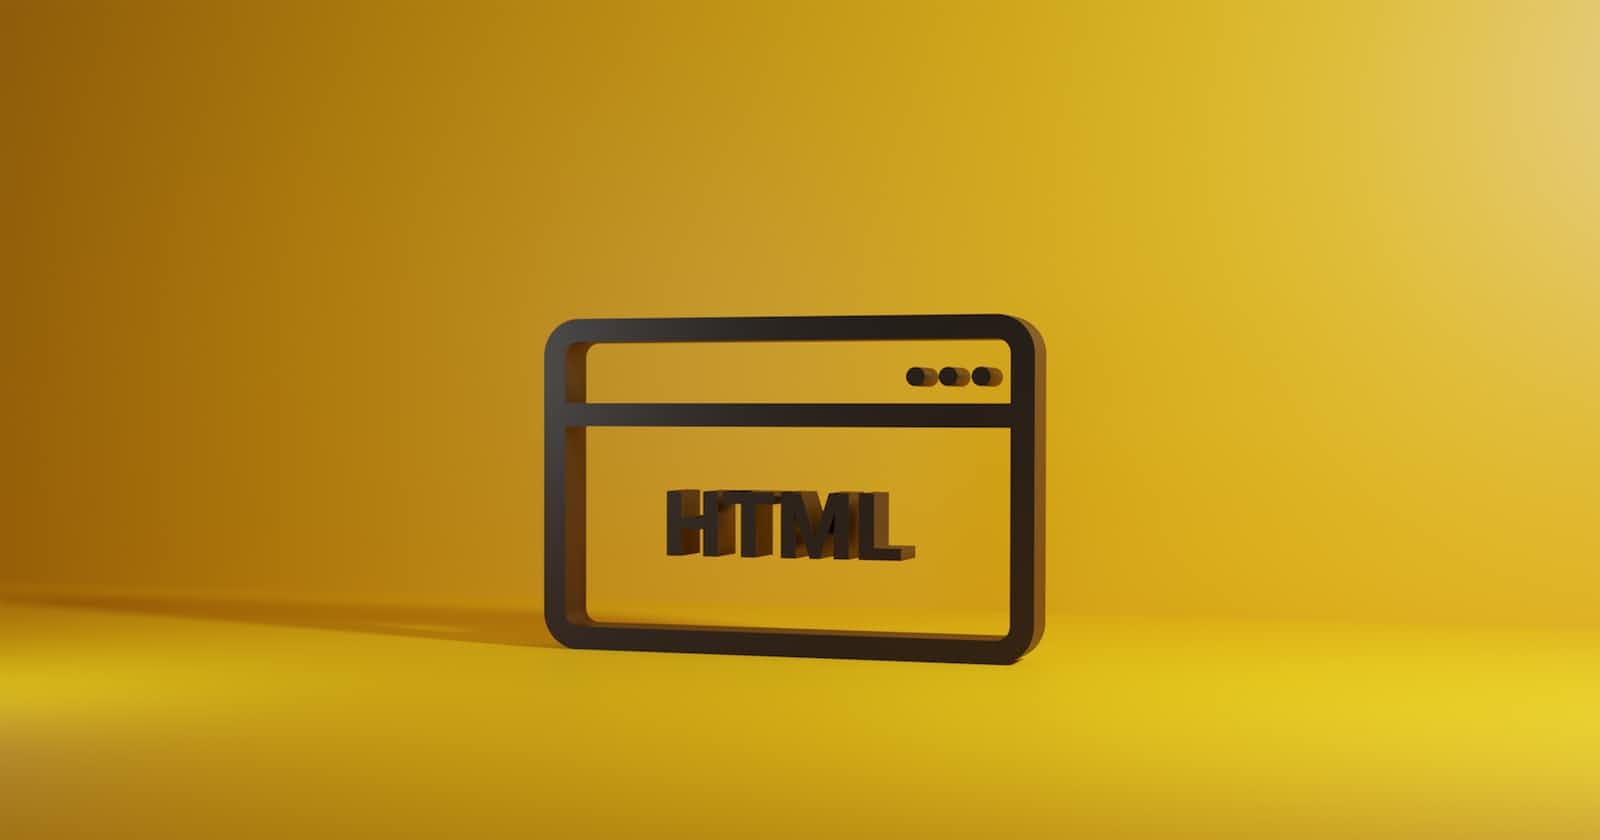 HTML Simplicity